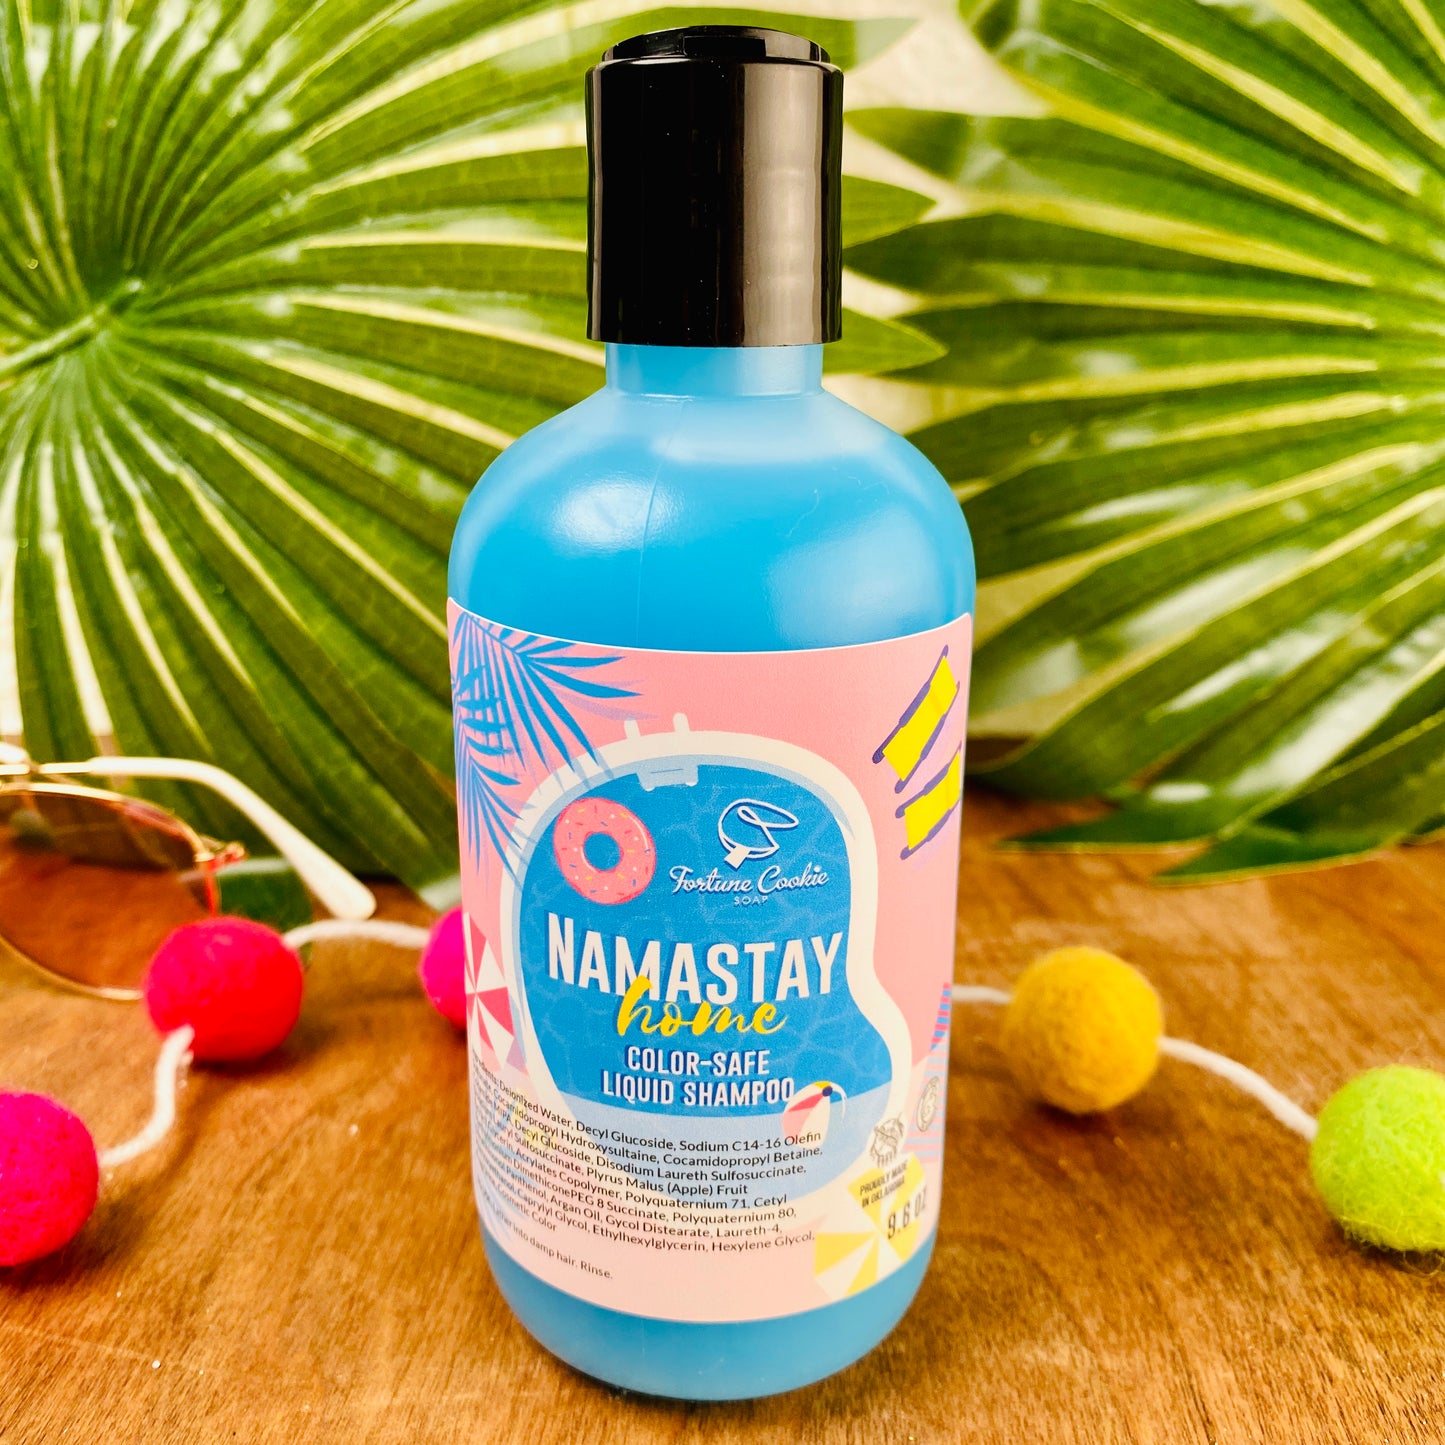 NAMASTAY HOME Color-Safe Liquid Shampoo